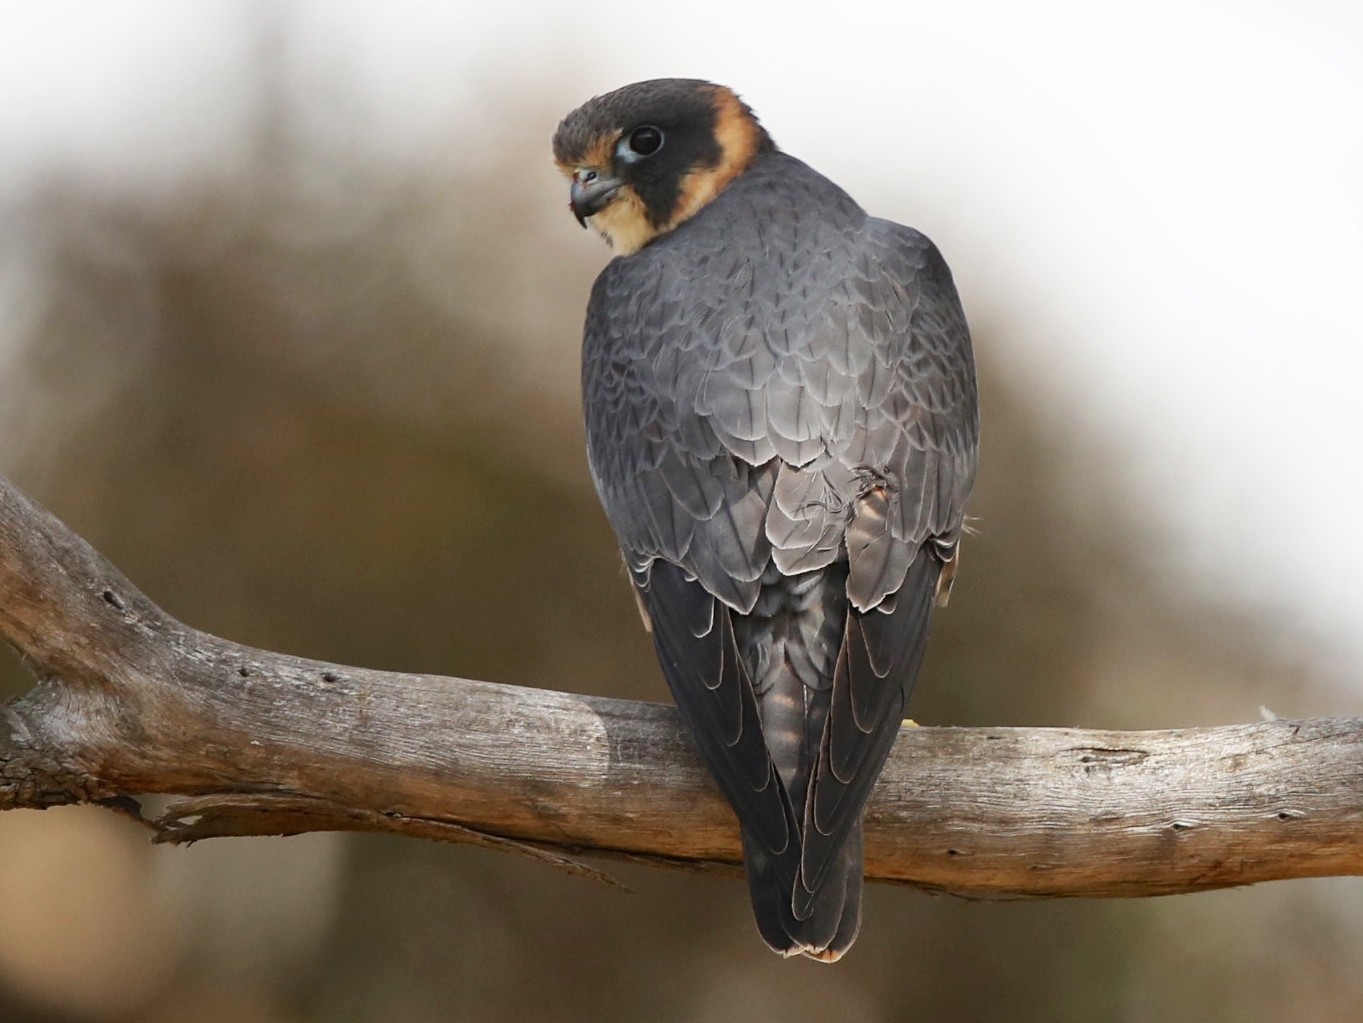 Australian Hobby, scientific name Falco longipennis